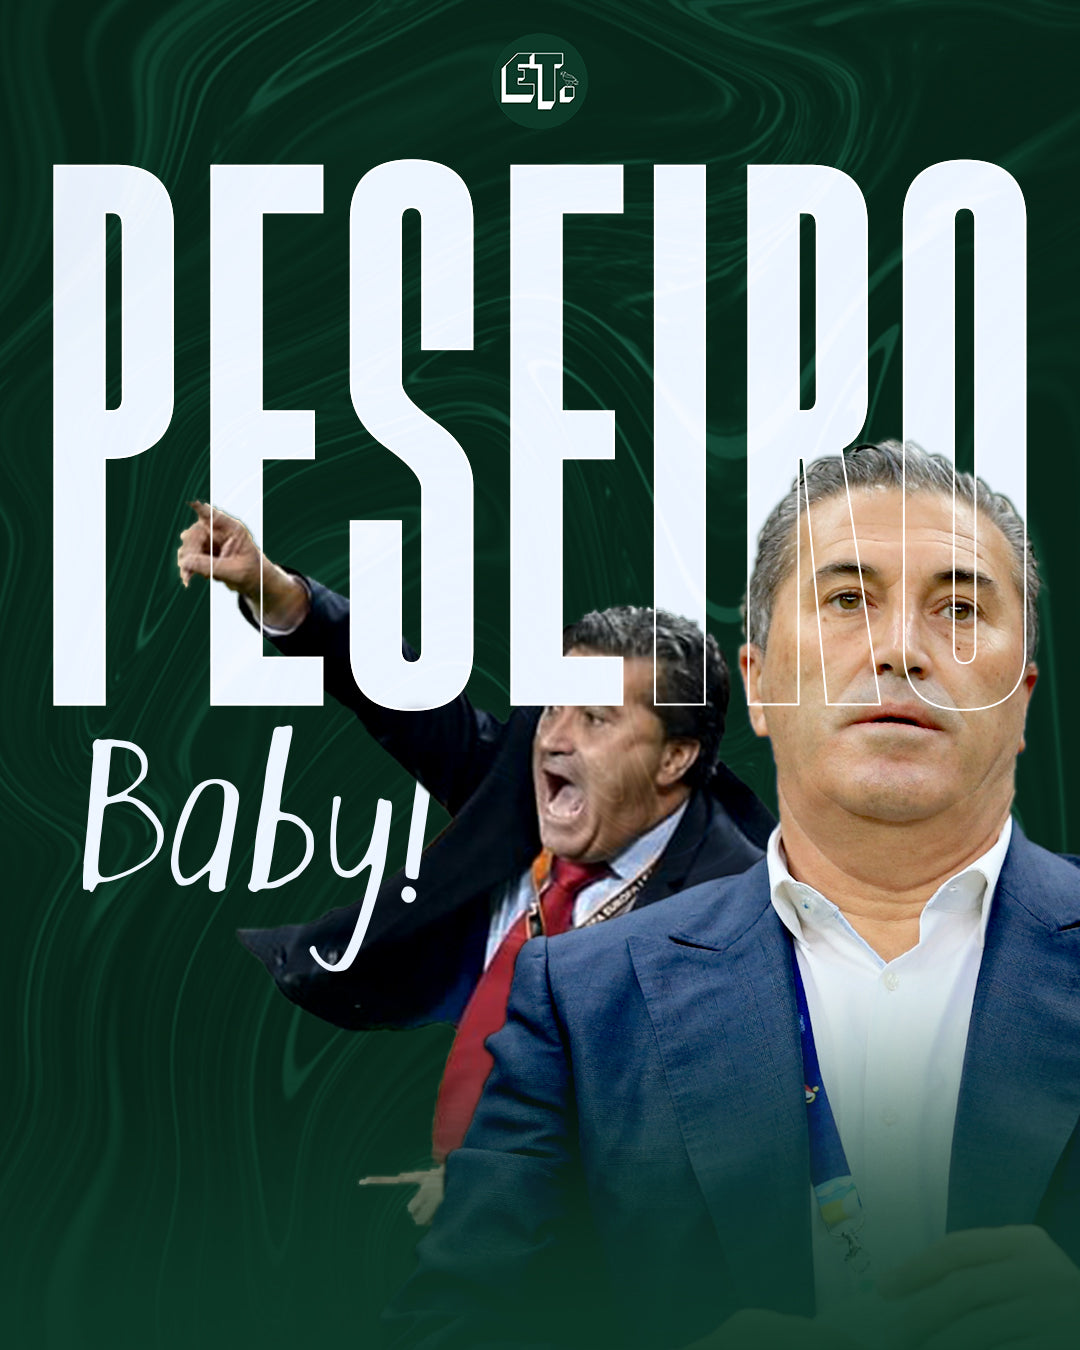 Jose Peseiro appointed as Super Eagles coach